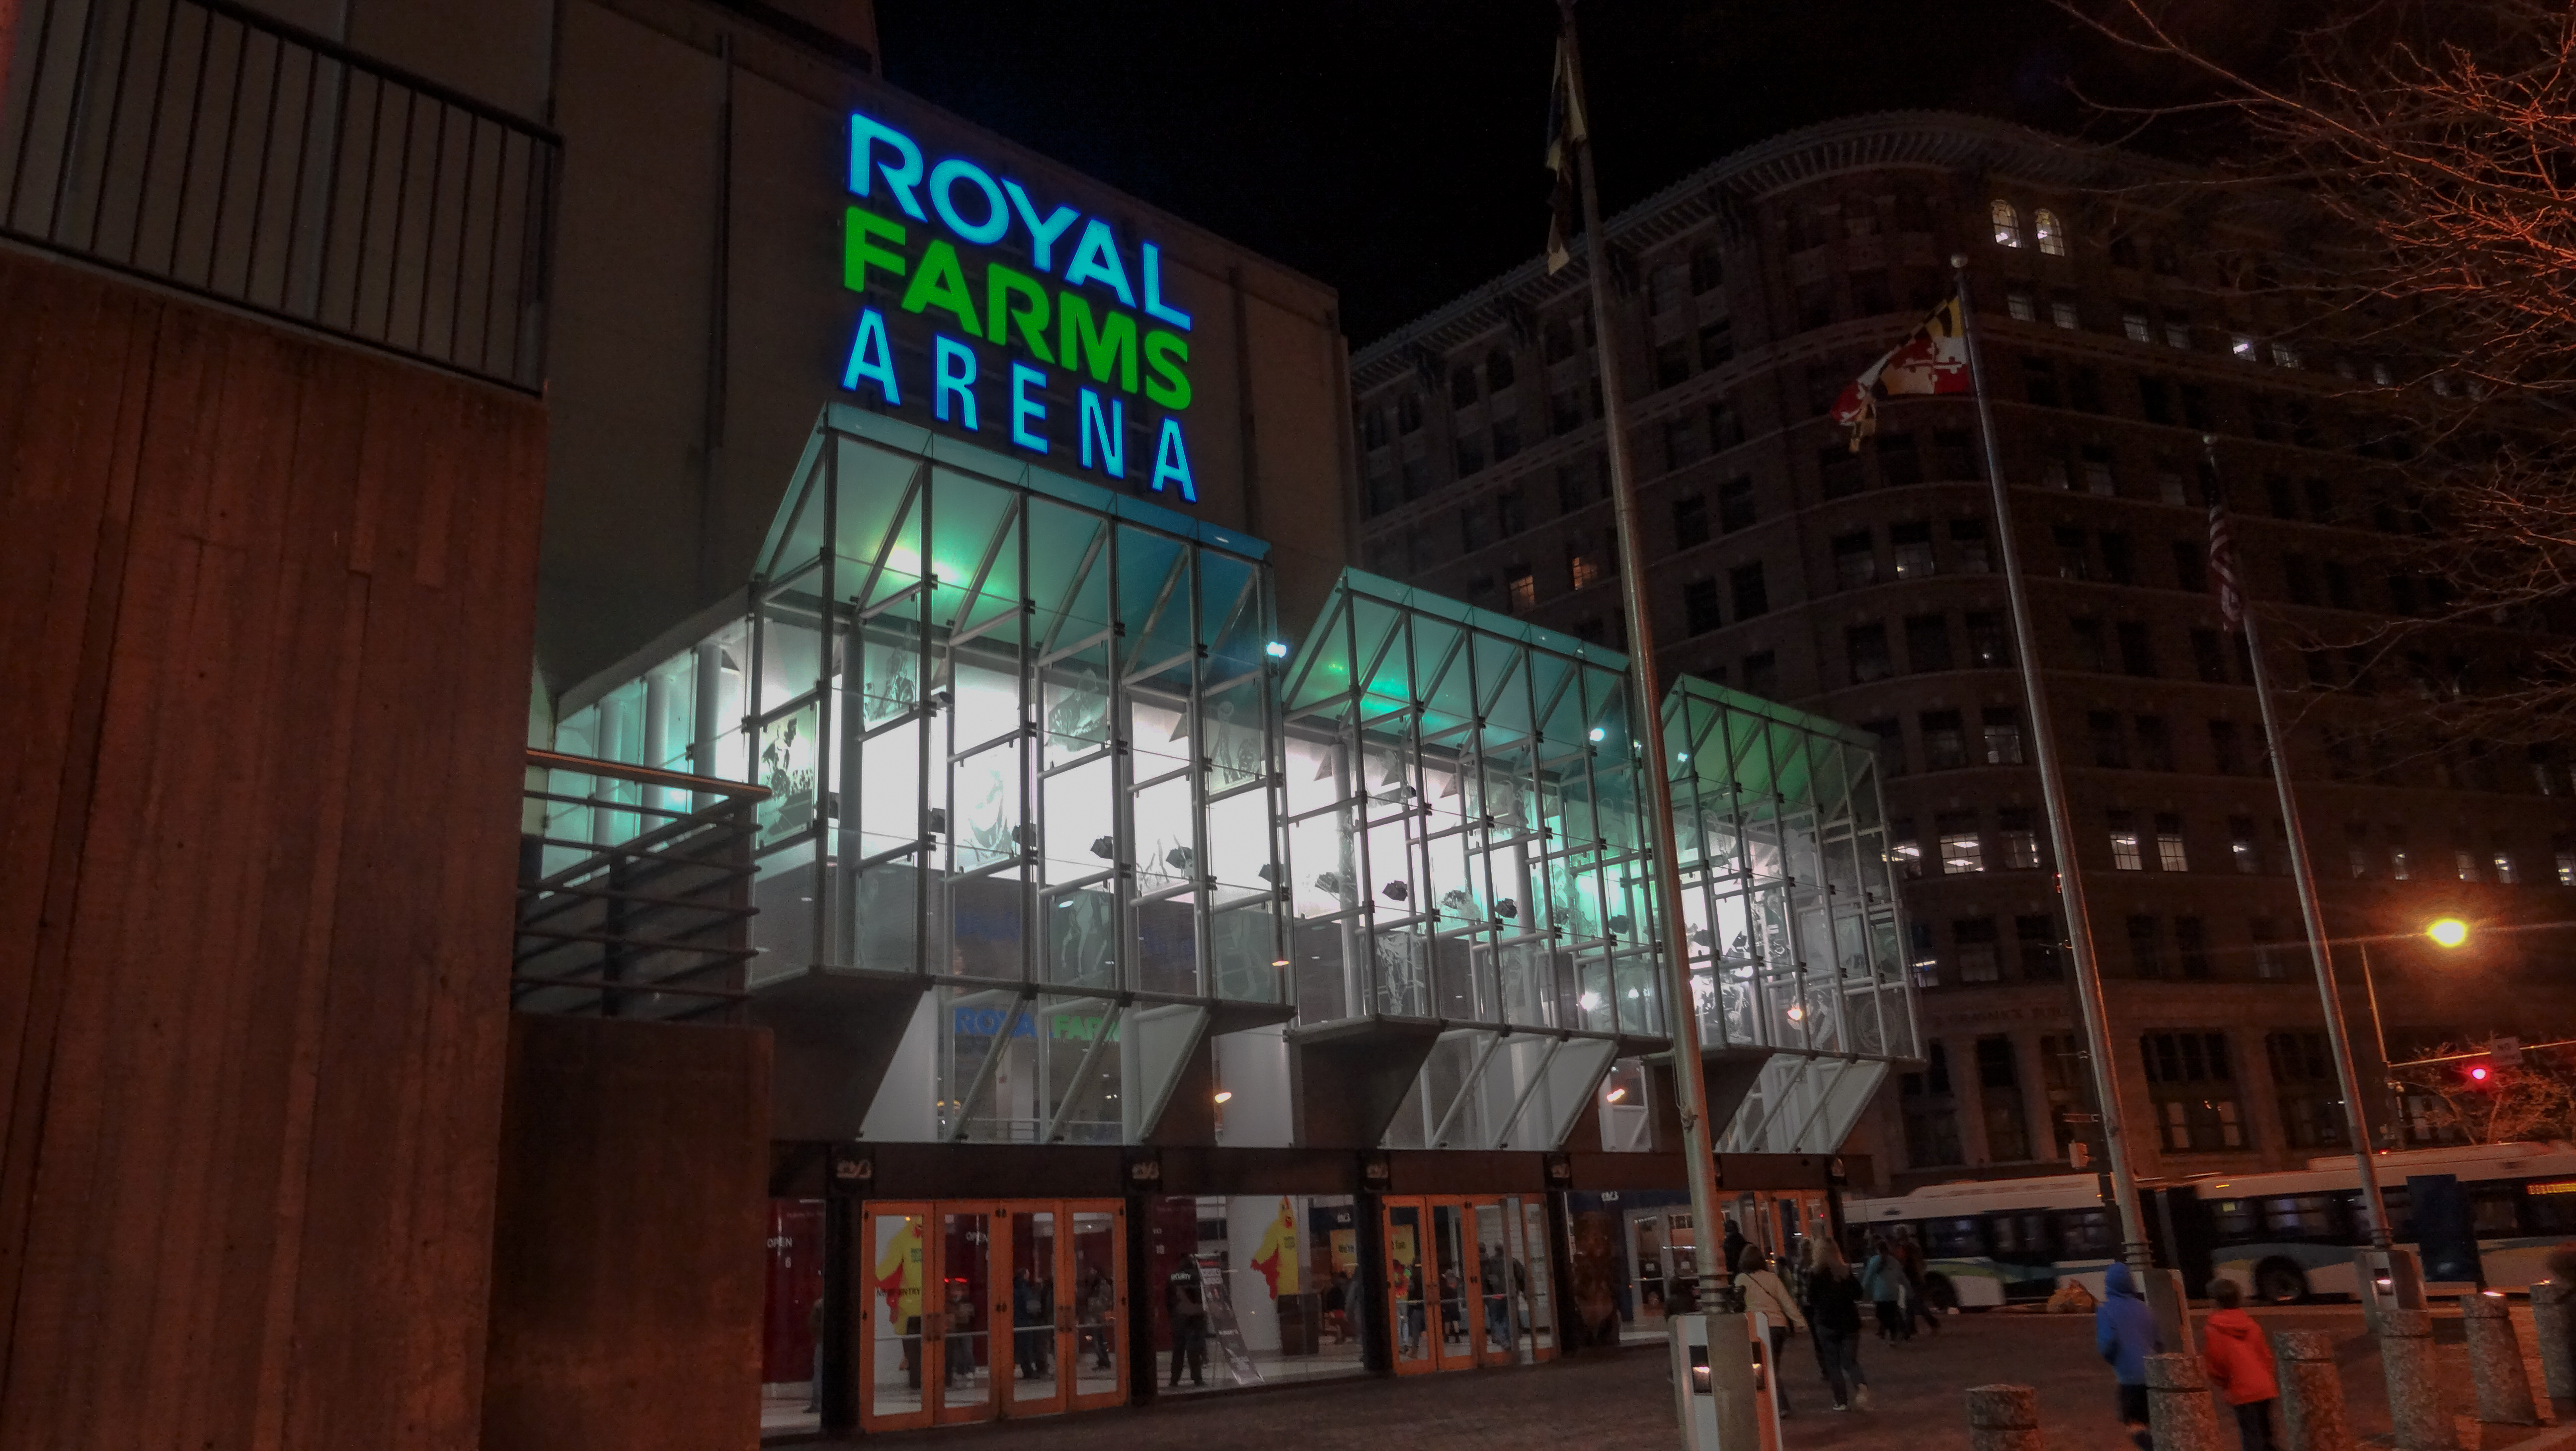 royal farms arena concerts